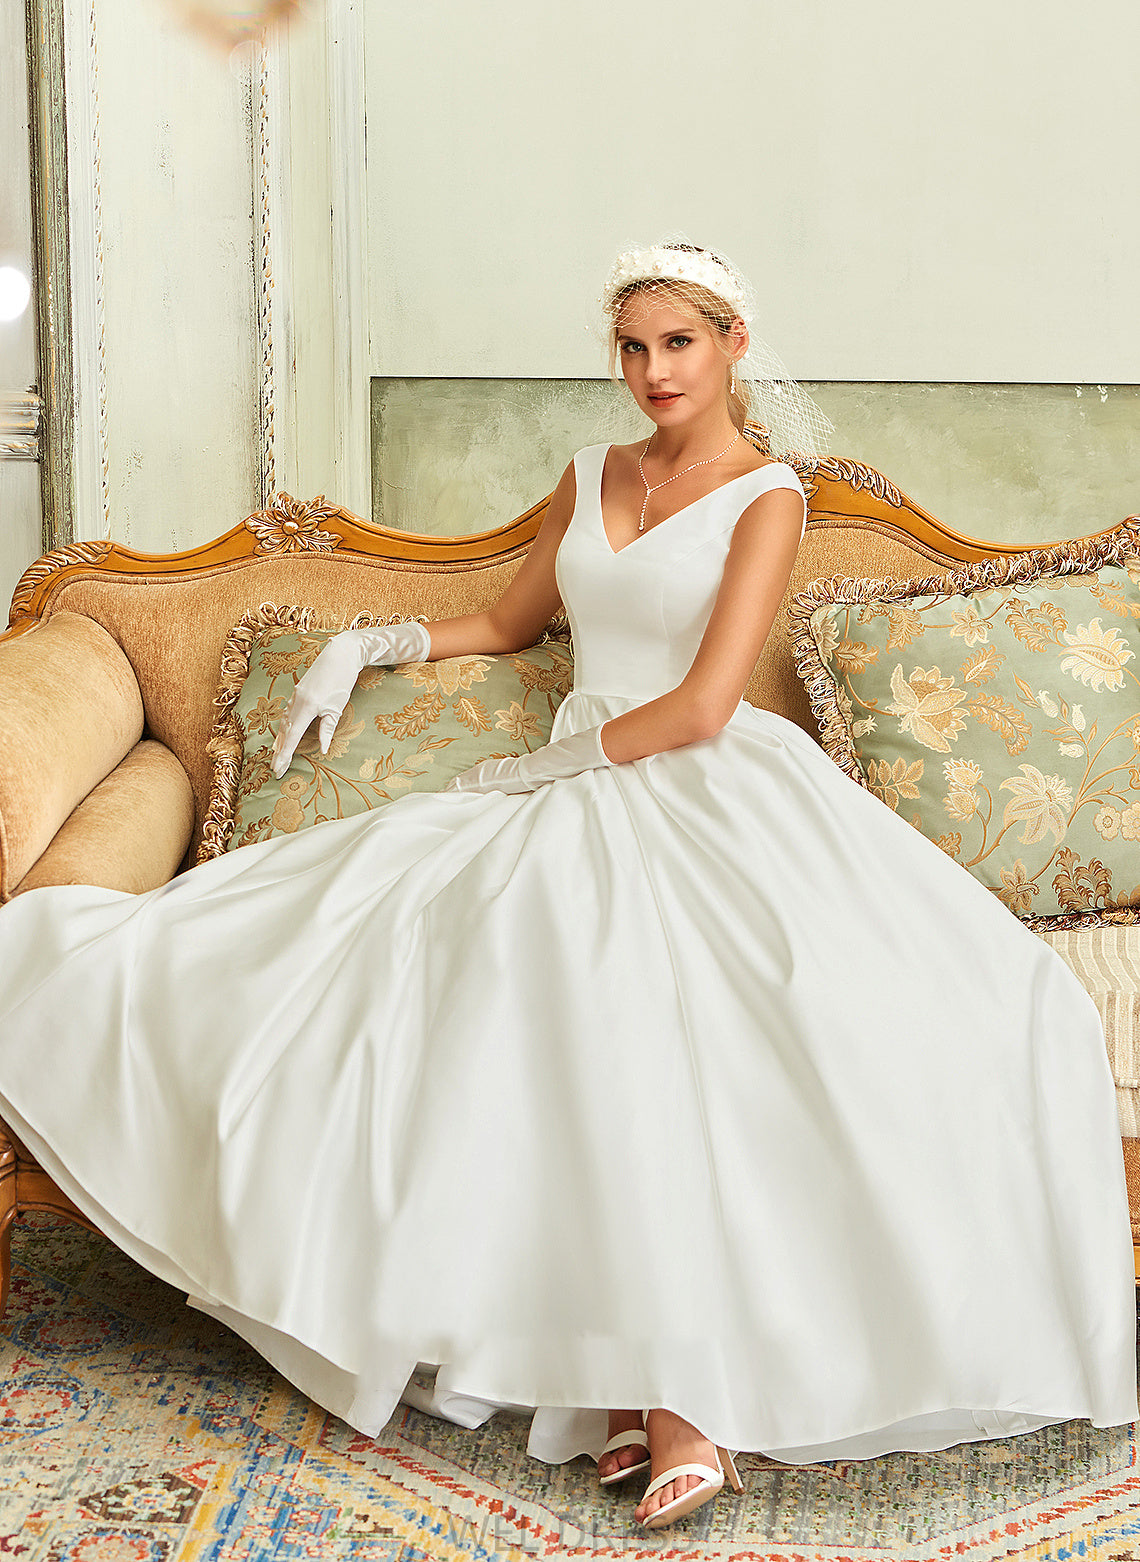 With Ball-Gown/Princess Jocelyn V-neck Dress Pockets Asymmetrical Satin Wedding Wedding Dresses